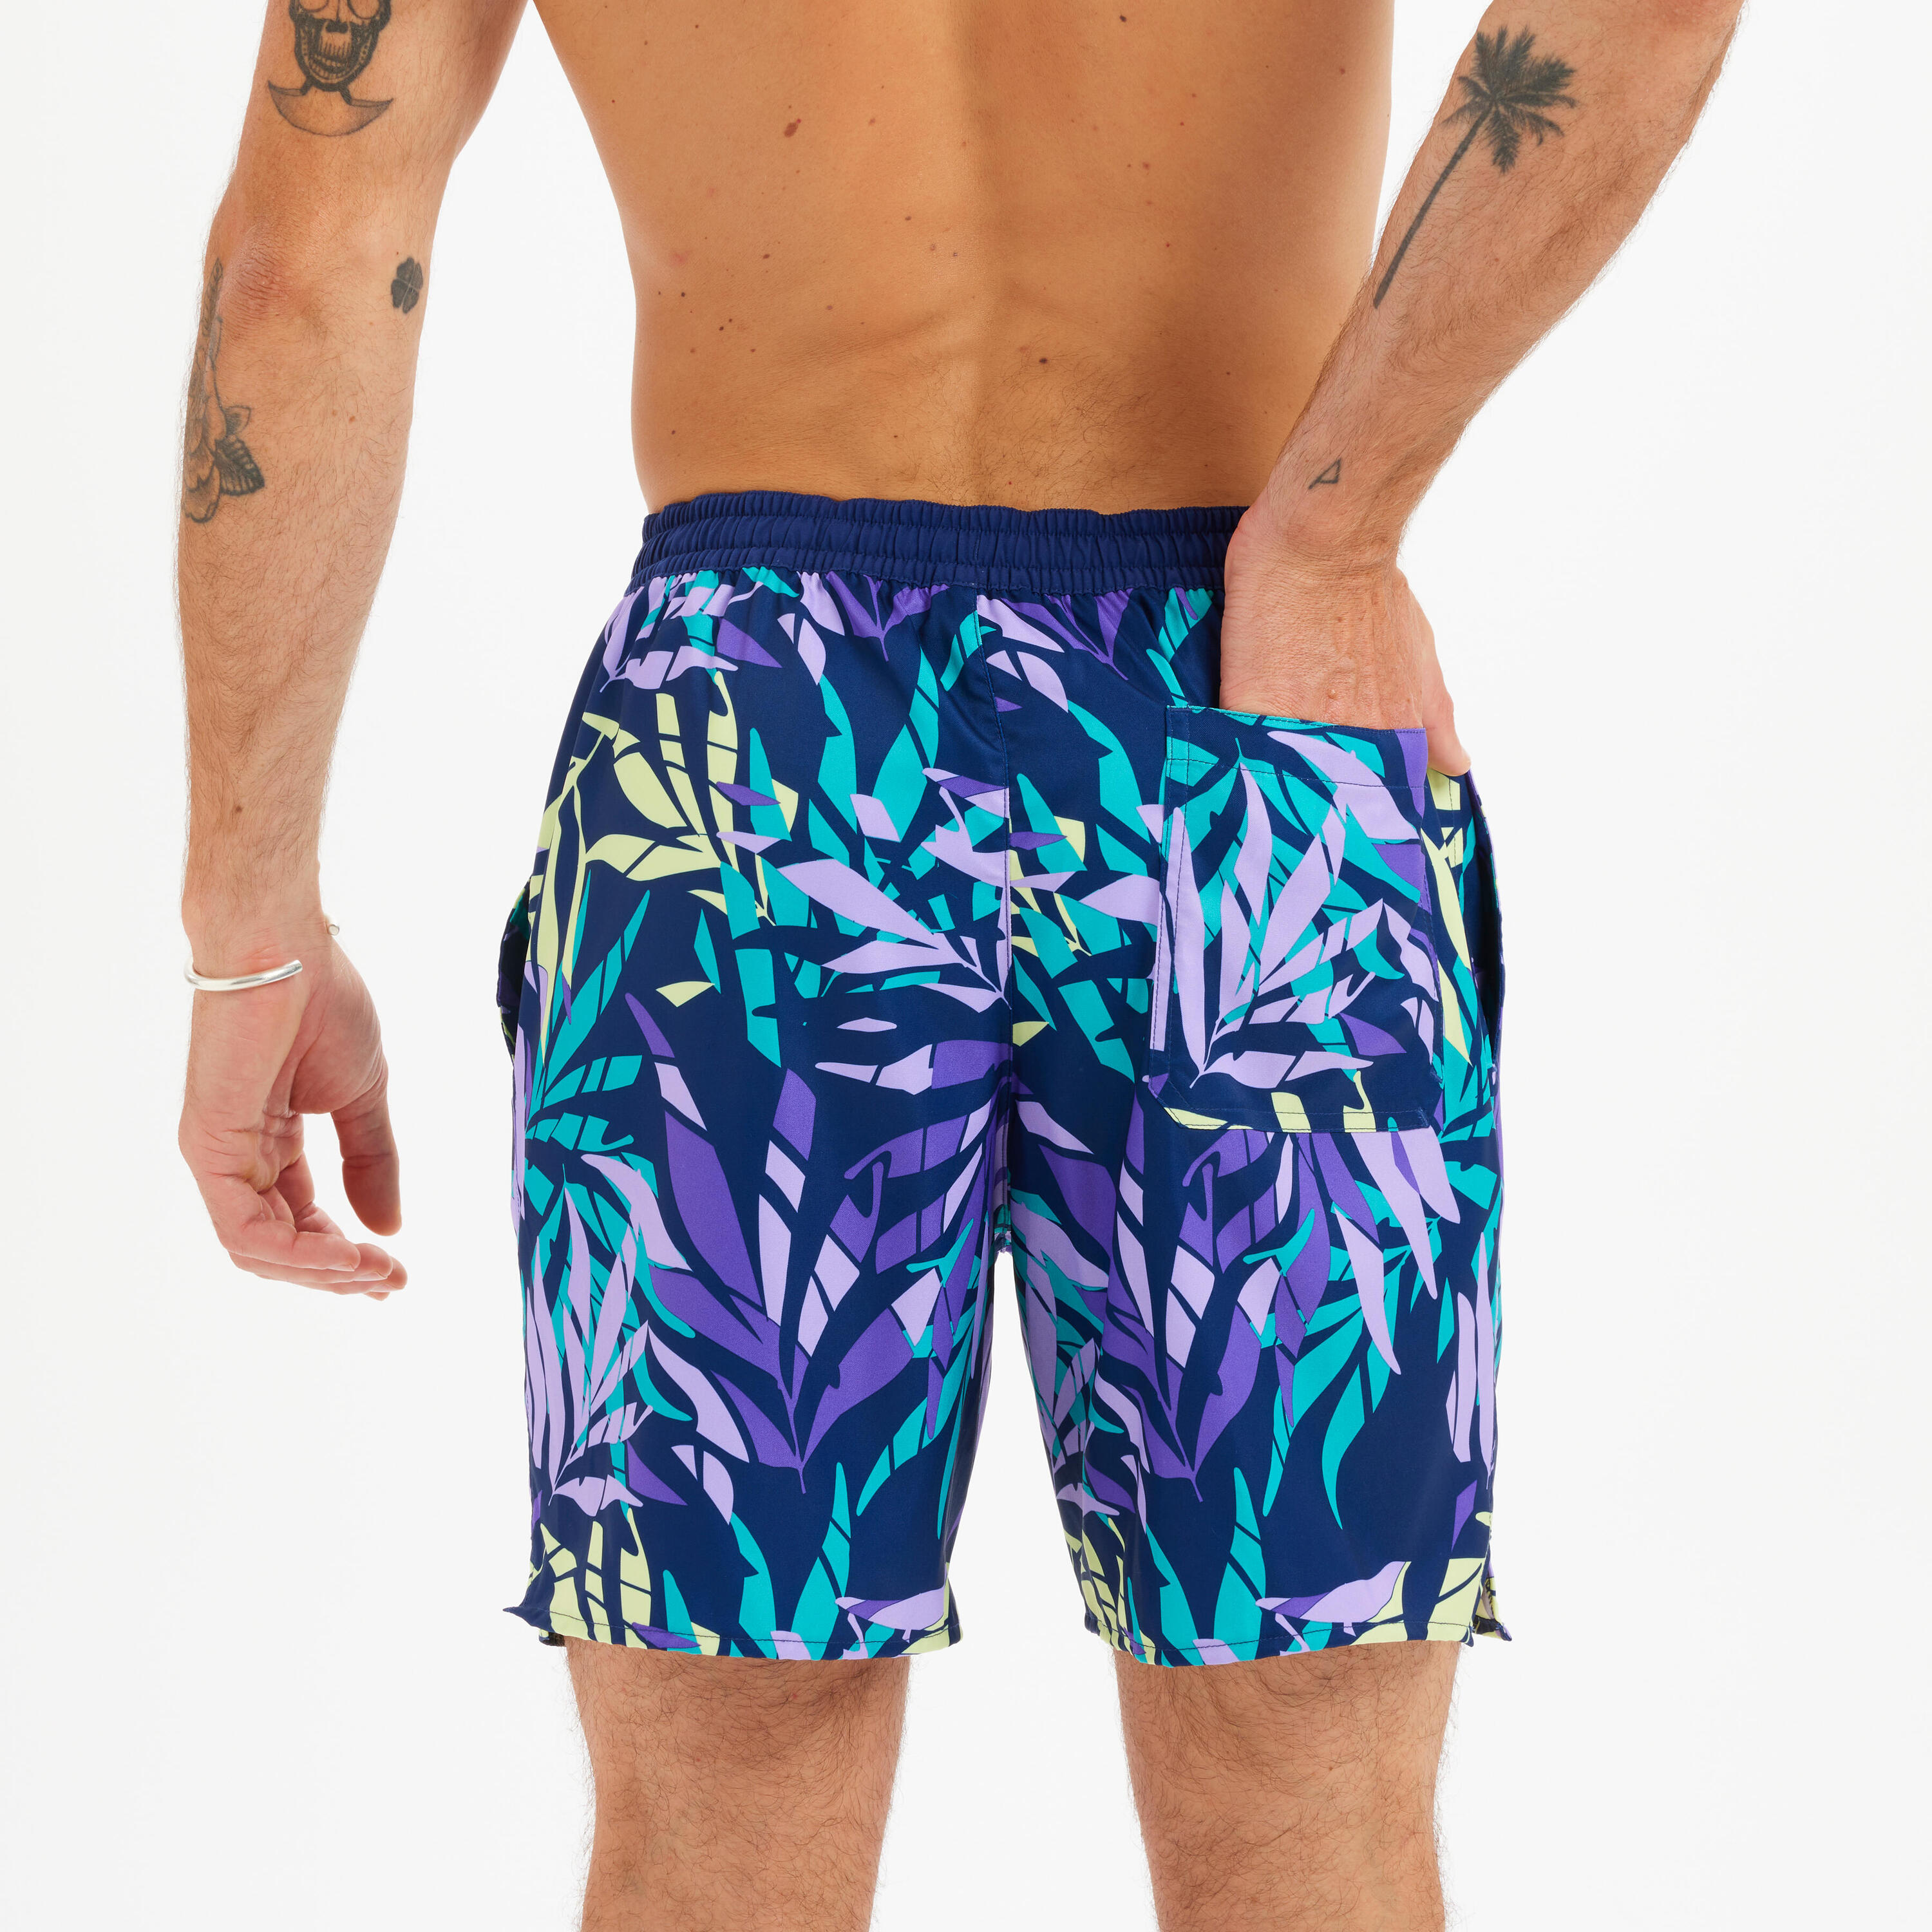 Men's swim shorts 20" - 100 shadow purple 4/7